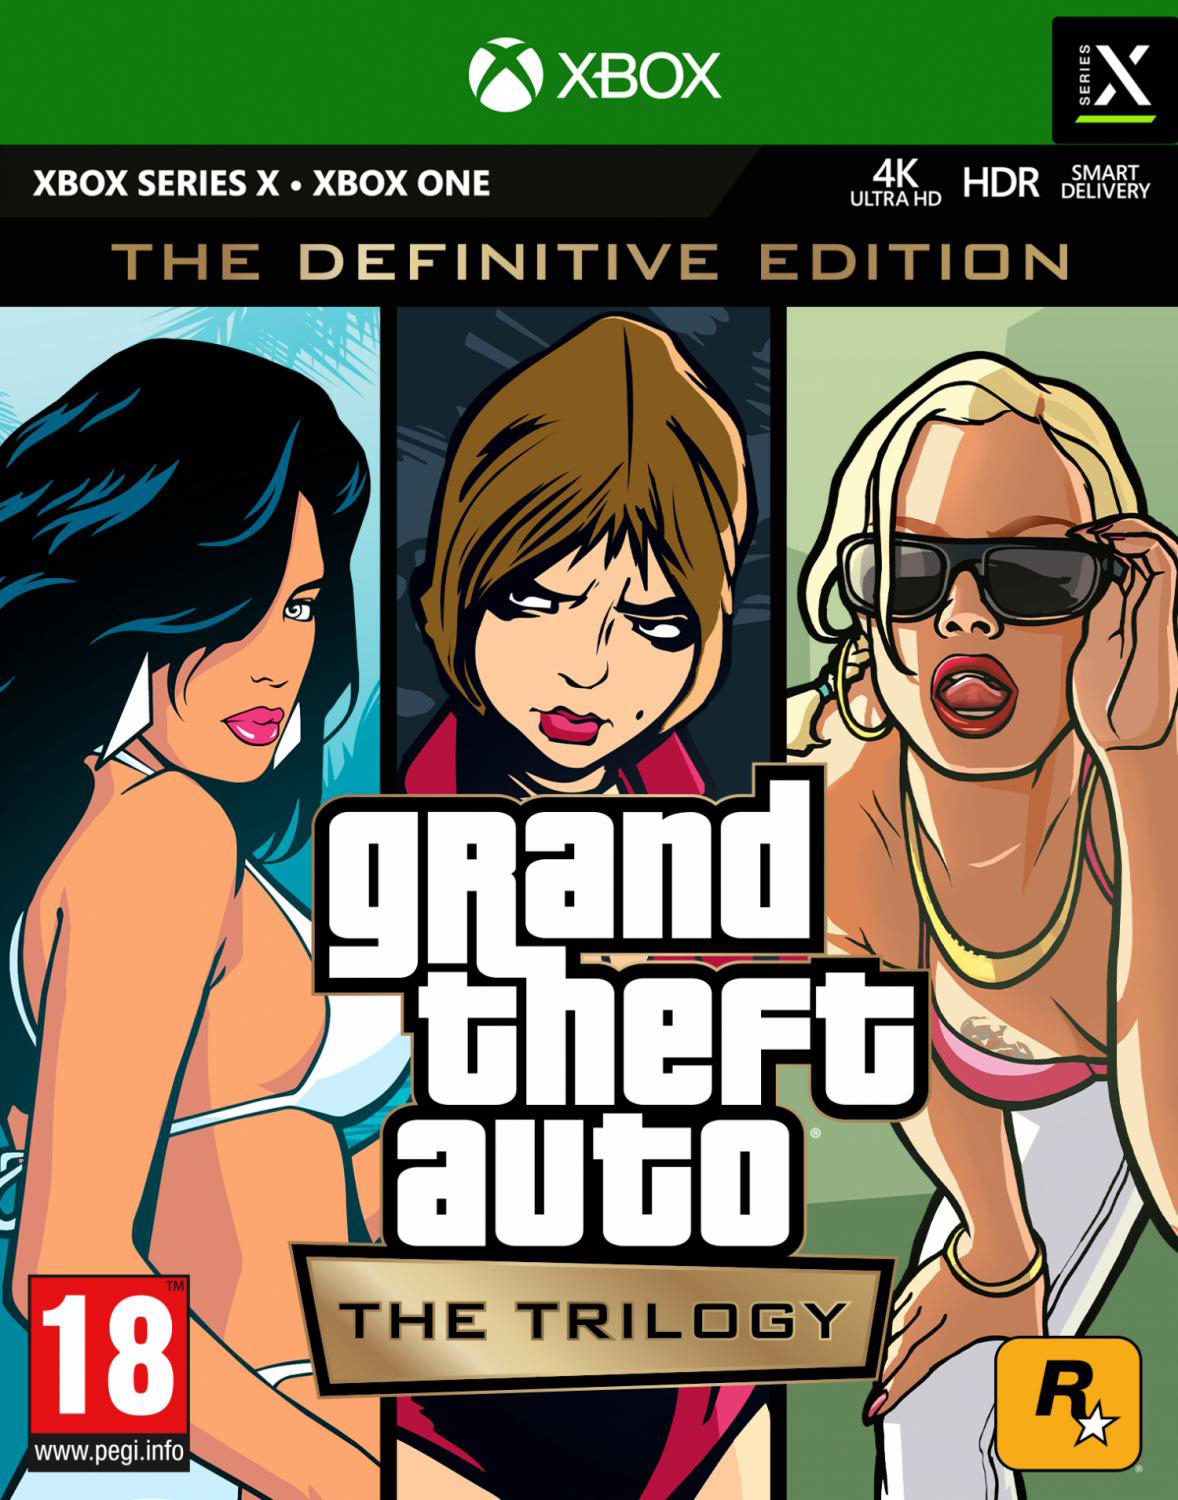 rockstar games Videogioco Rockstar Games Xbox GTA The Trilogy Defini